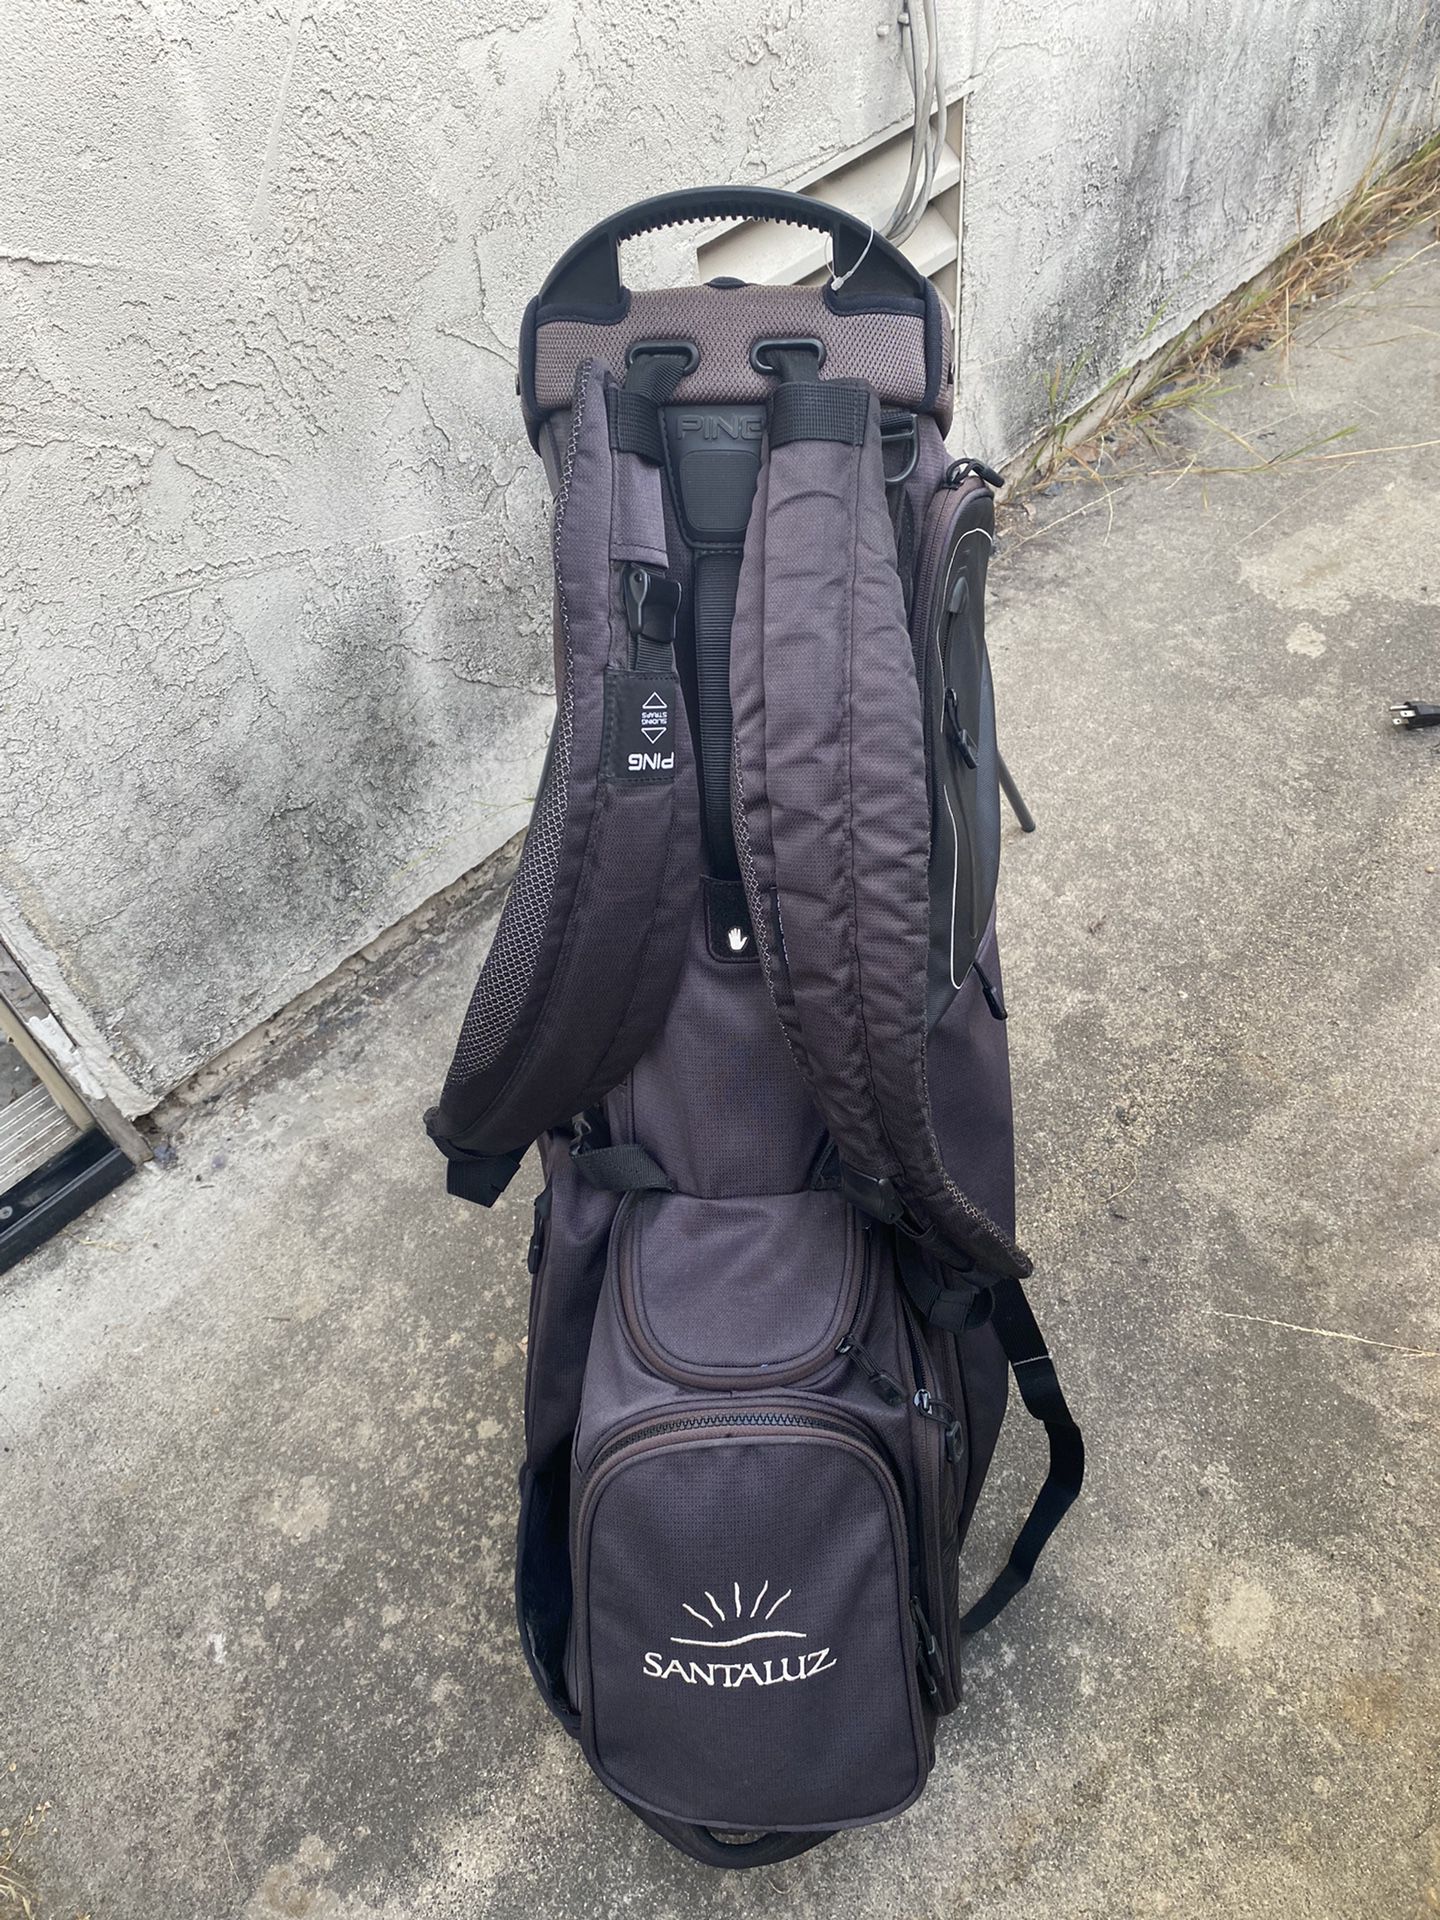 Ping Santa Luz Golf Bag